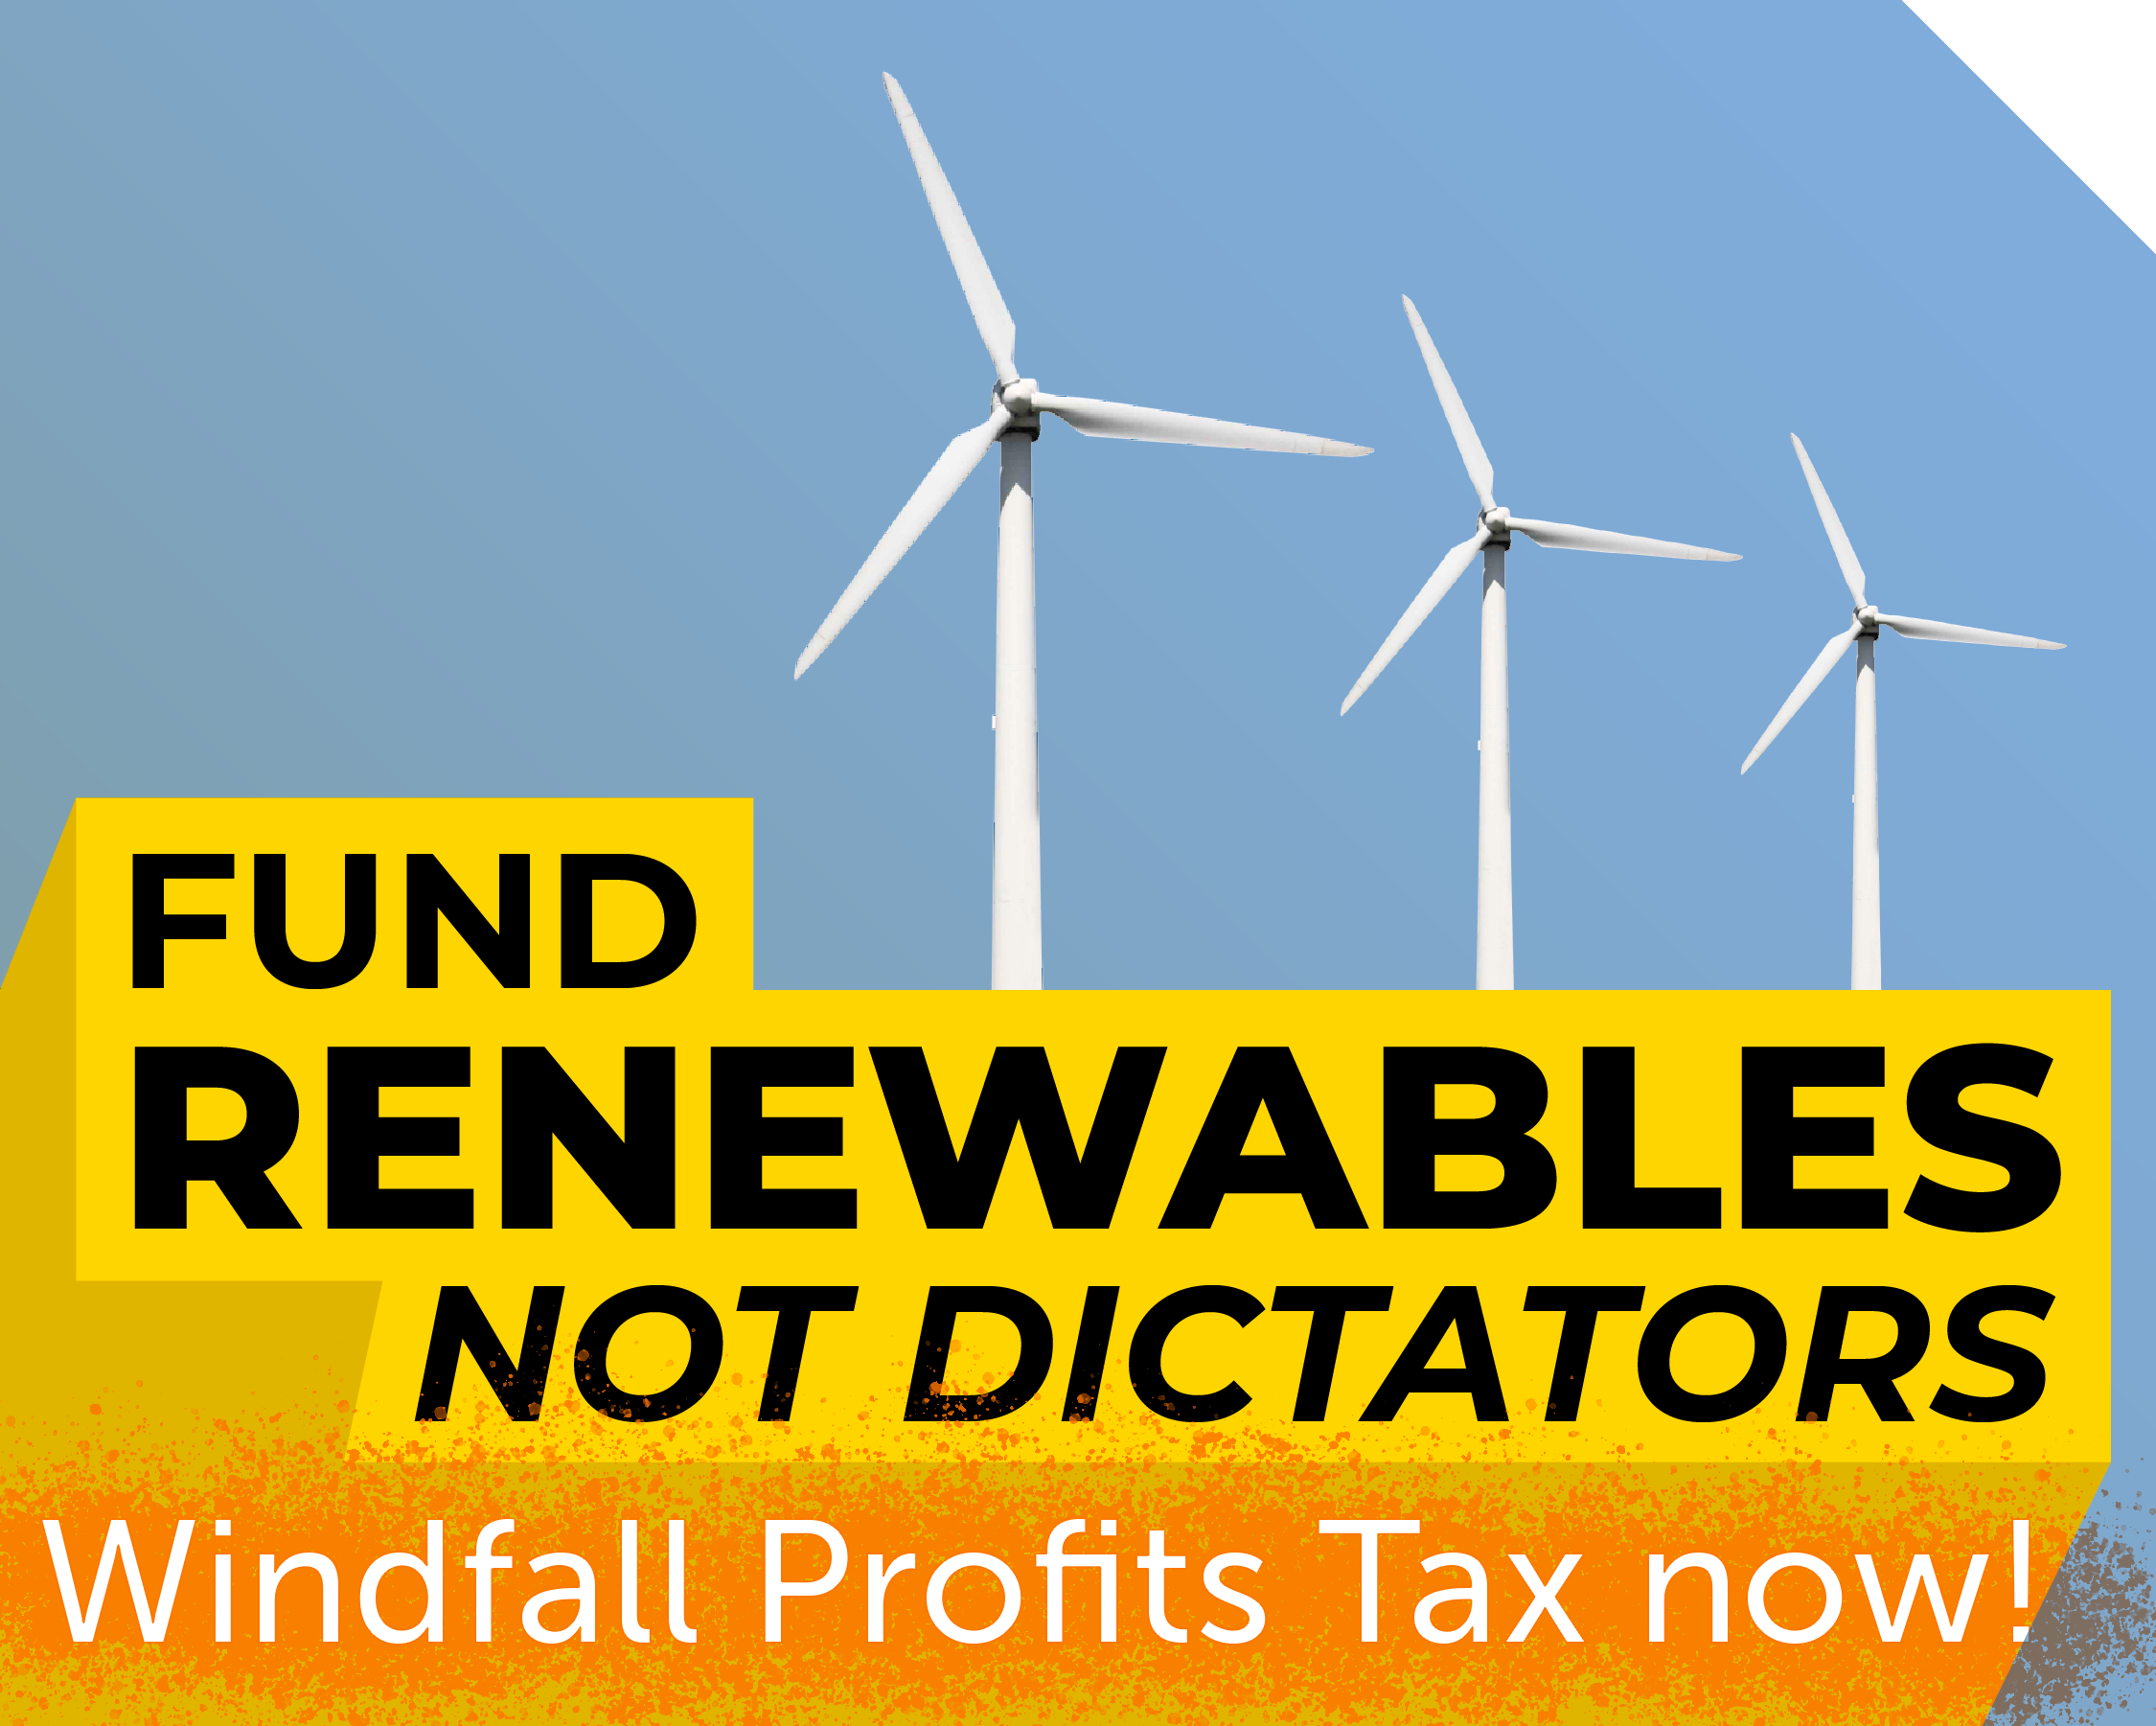 Fund Renewables not dictators